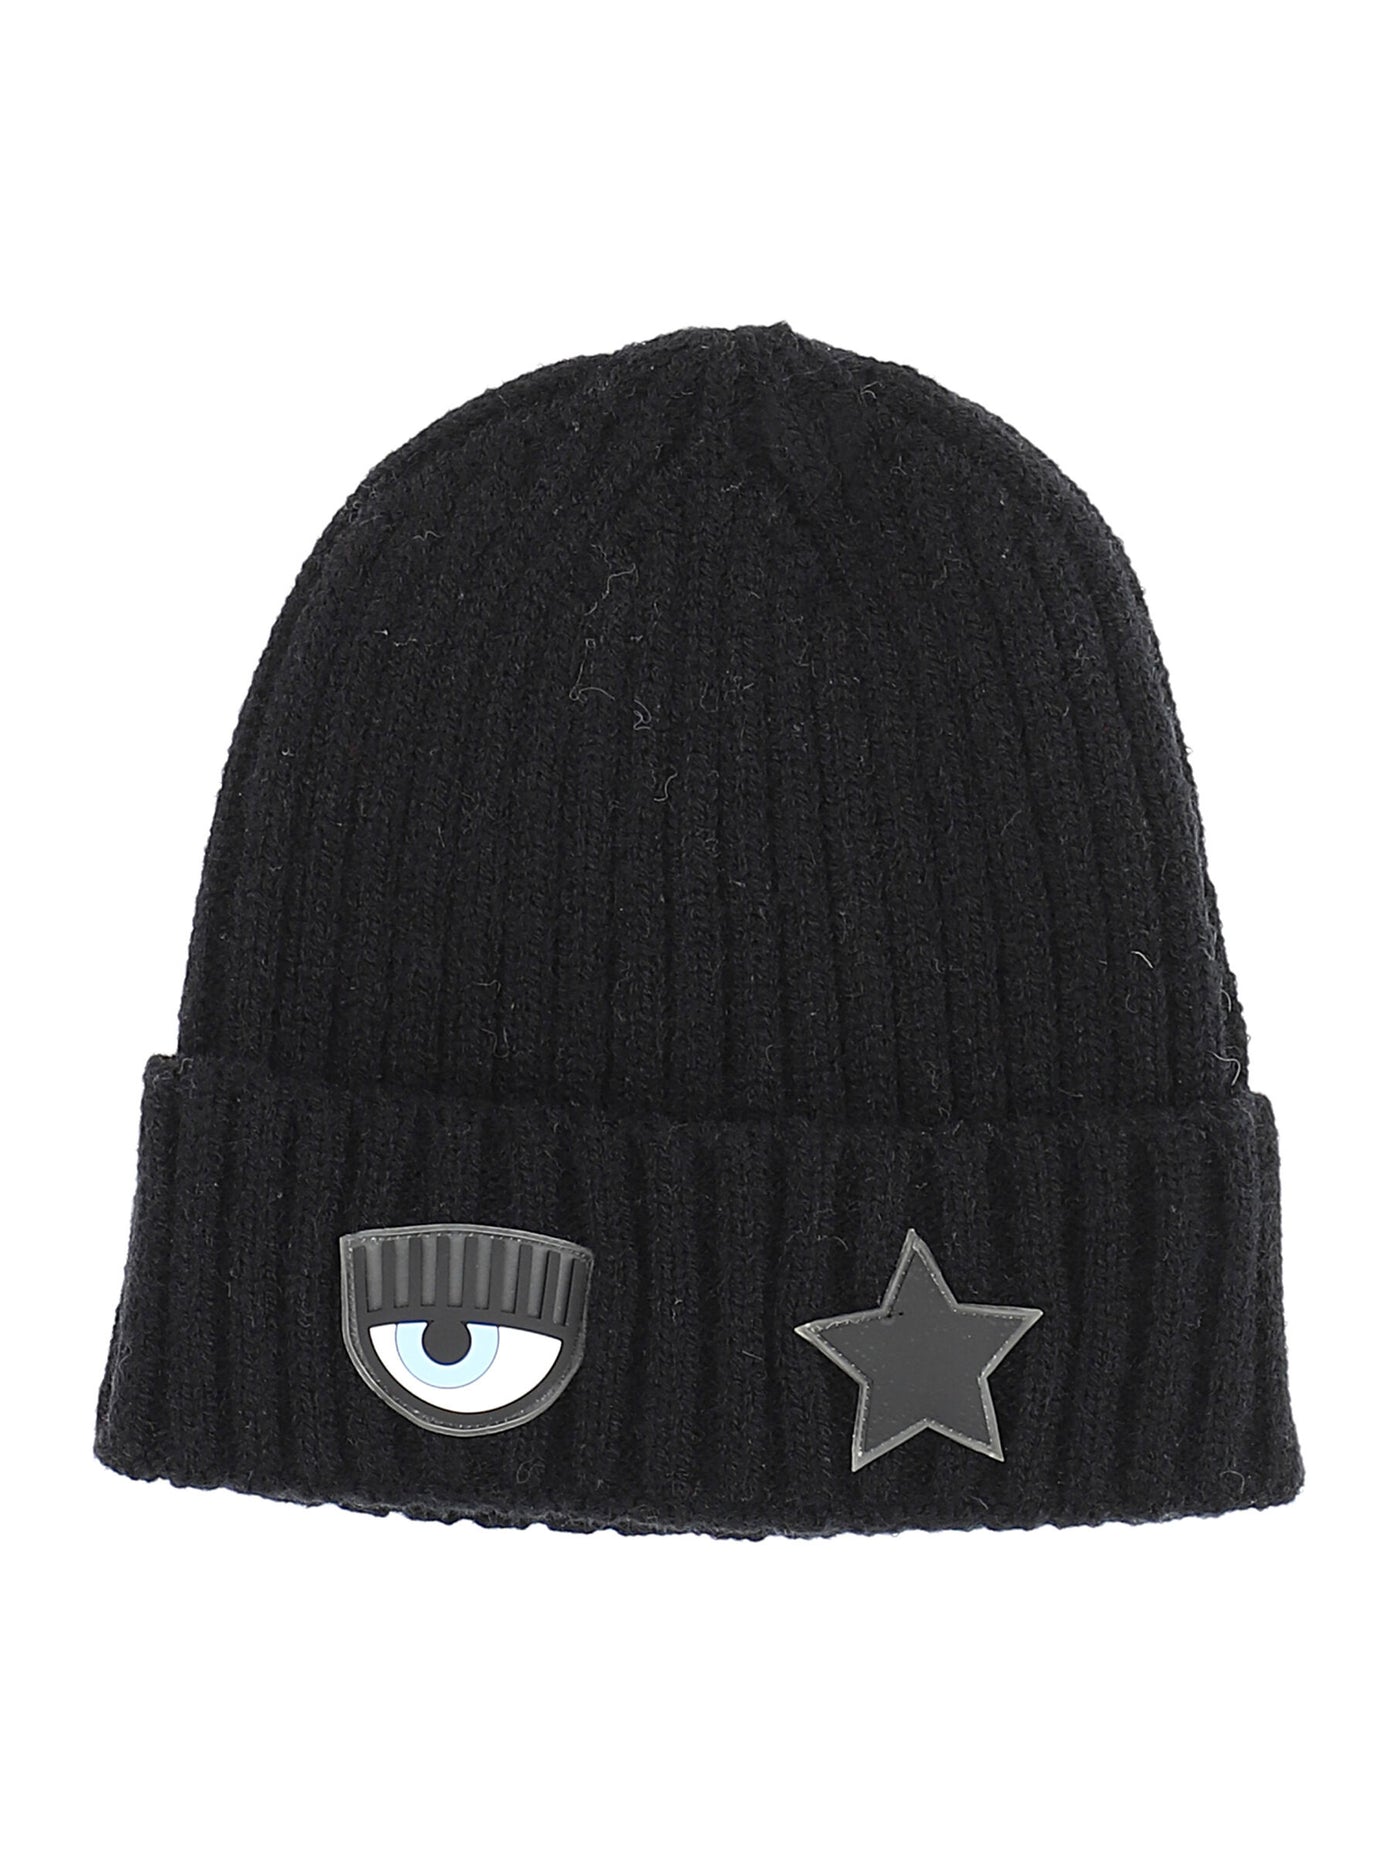 CHIARA FERRAGNI - Eyestar wool blend hat